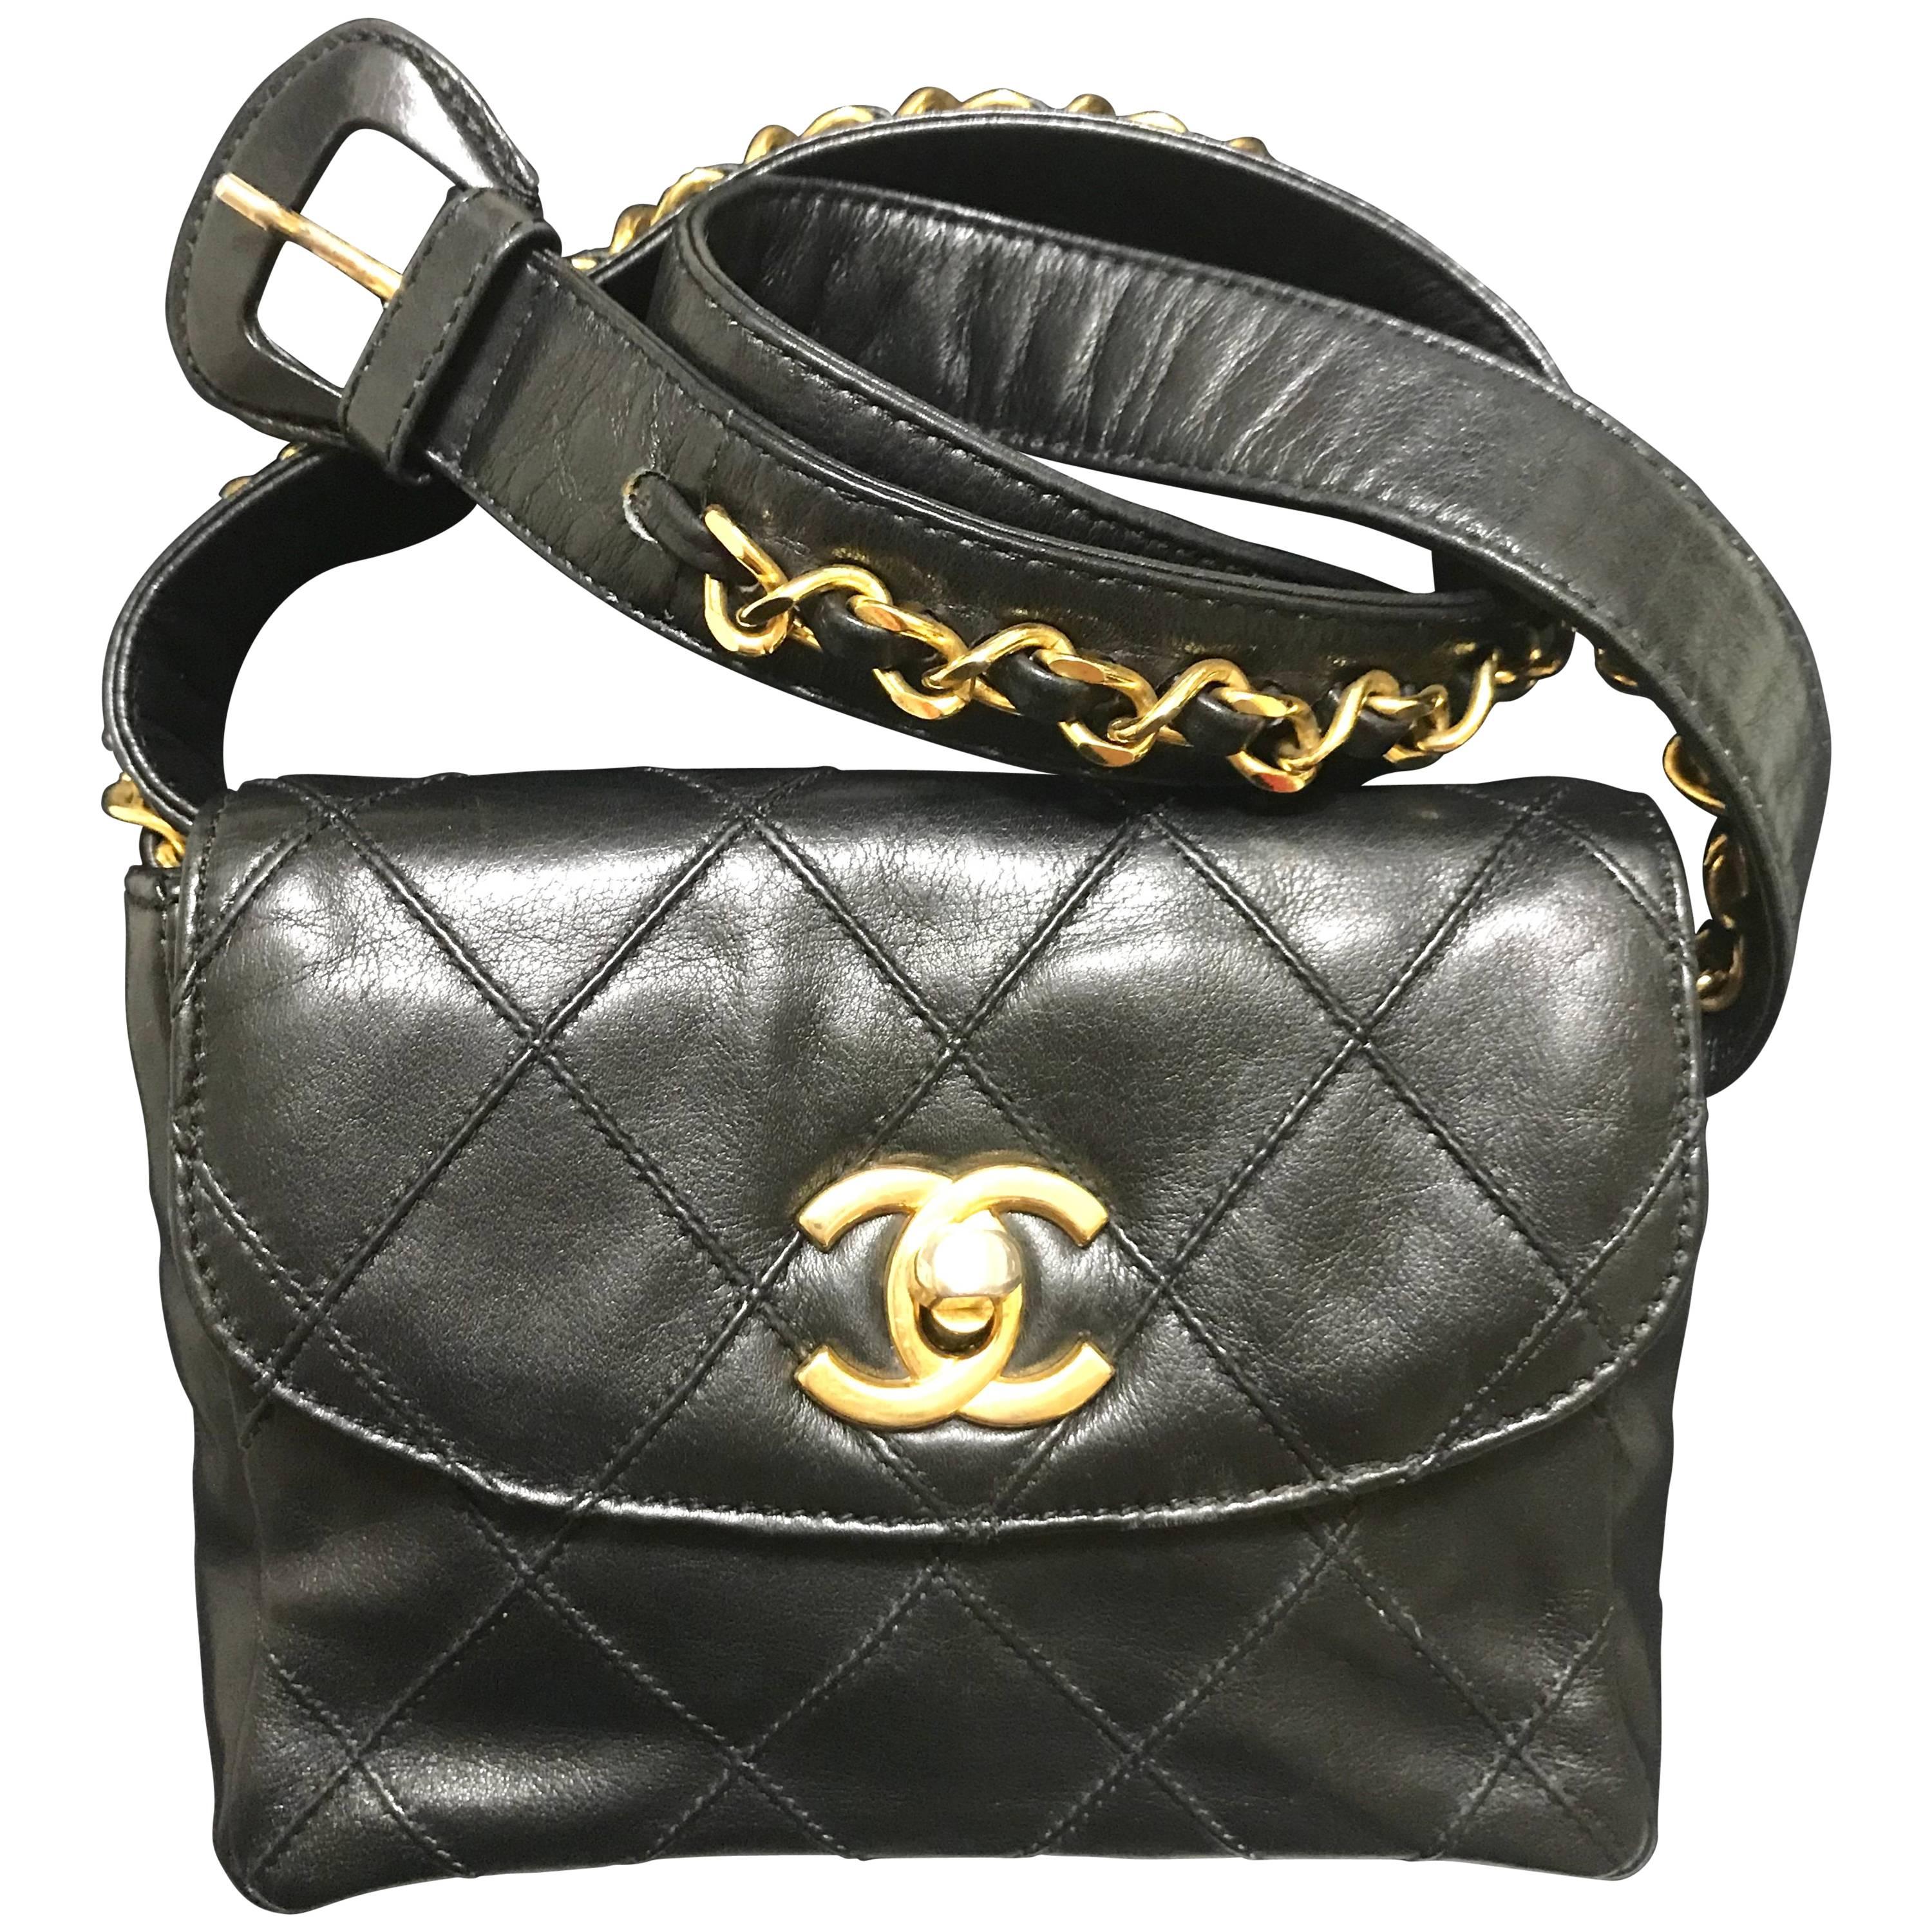 Vintage CHANEL black leather waist purse, fanny pack, hip bag with golden CC.